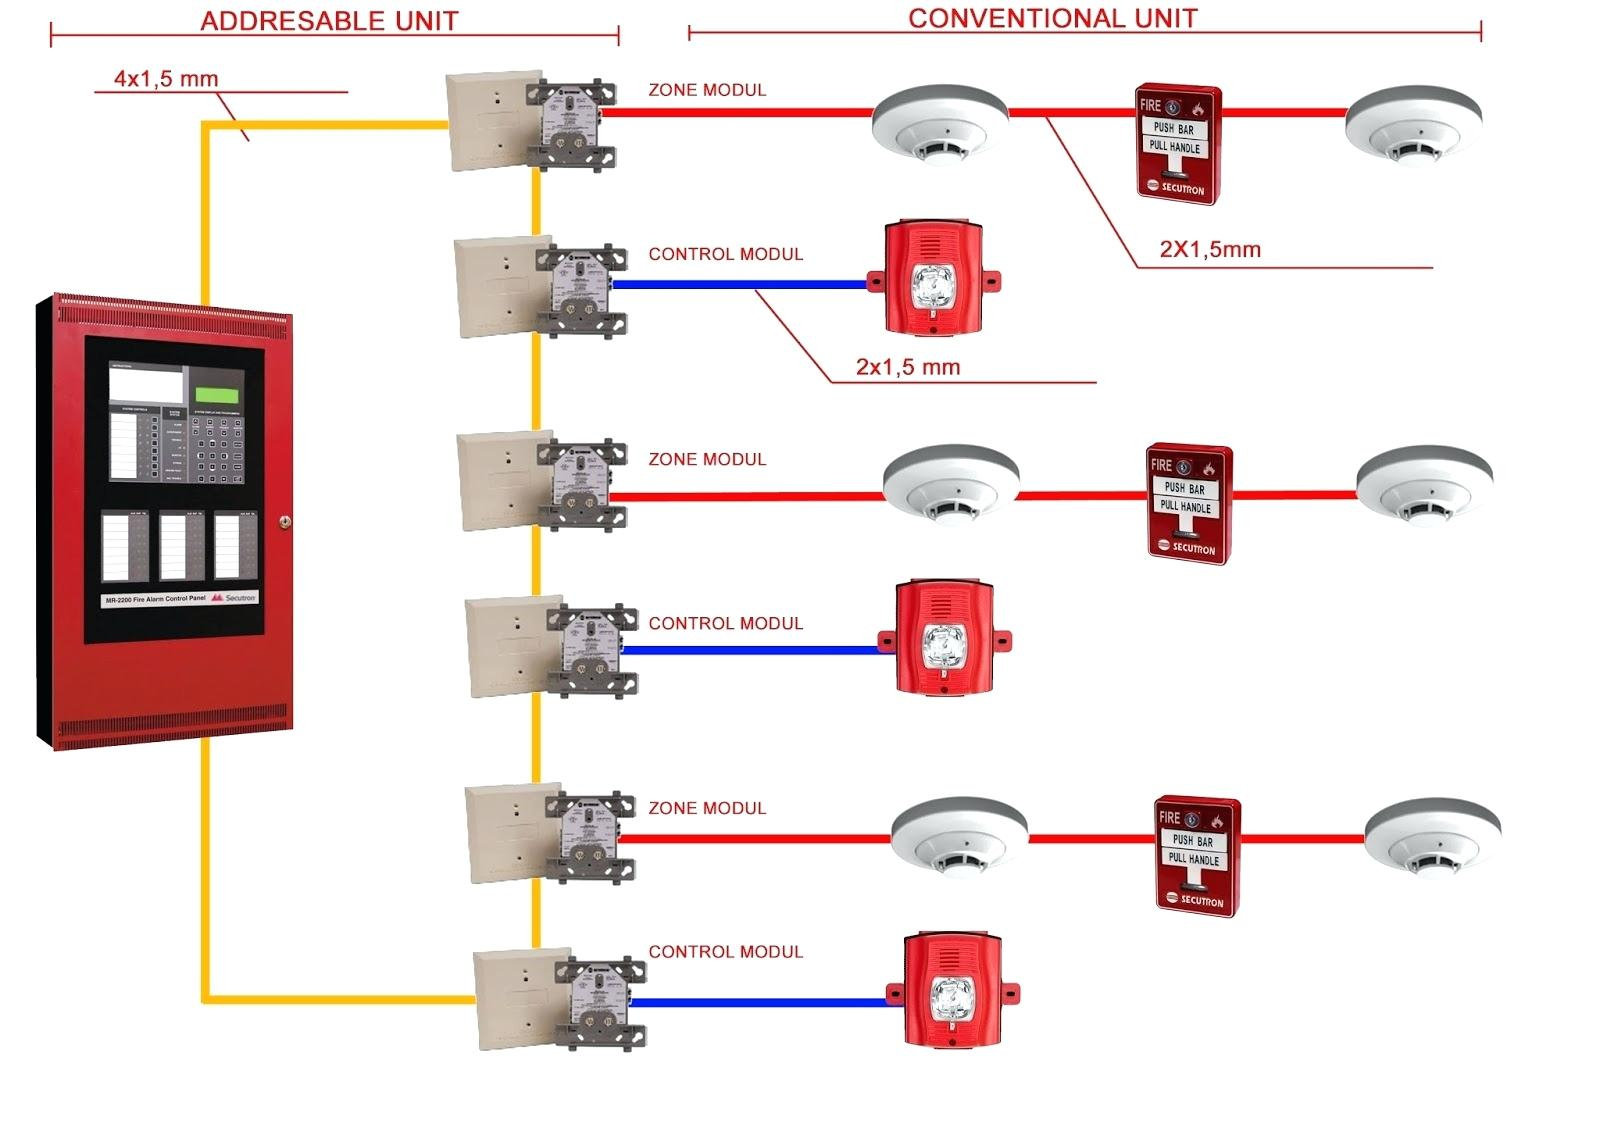 Class B Fire Alarm Wiring Diagram from www.bengalss.com